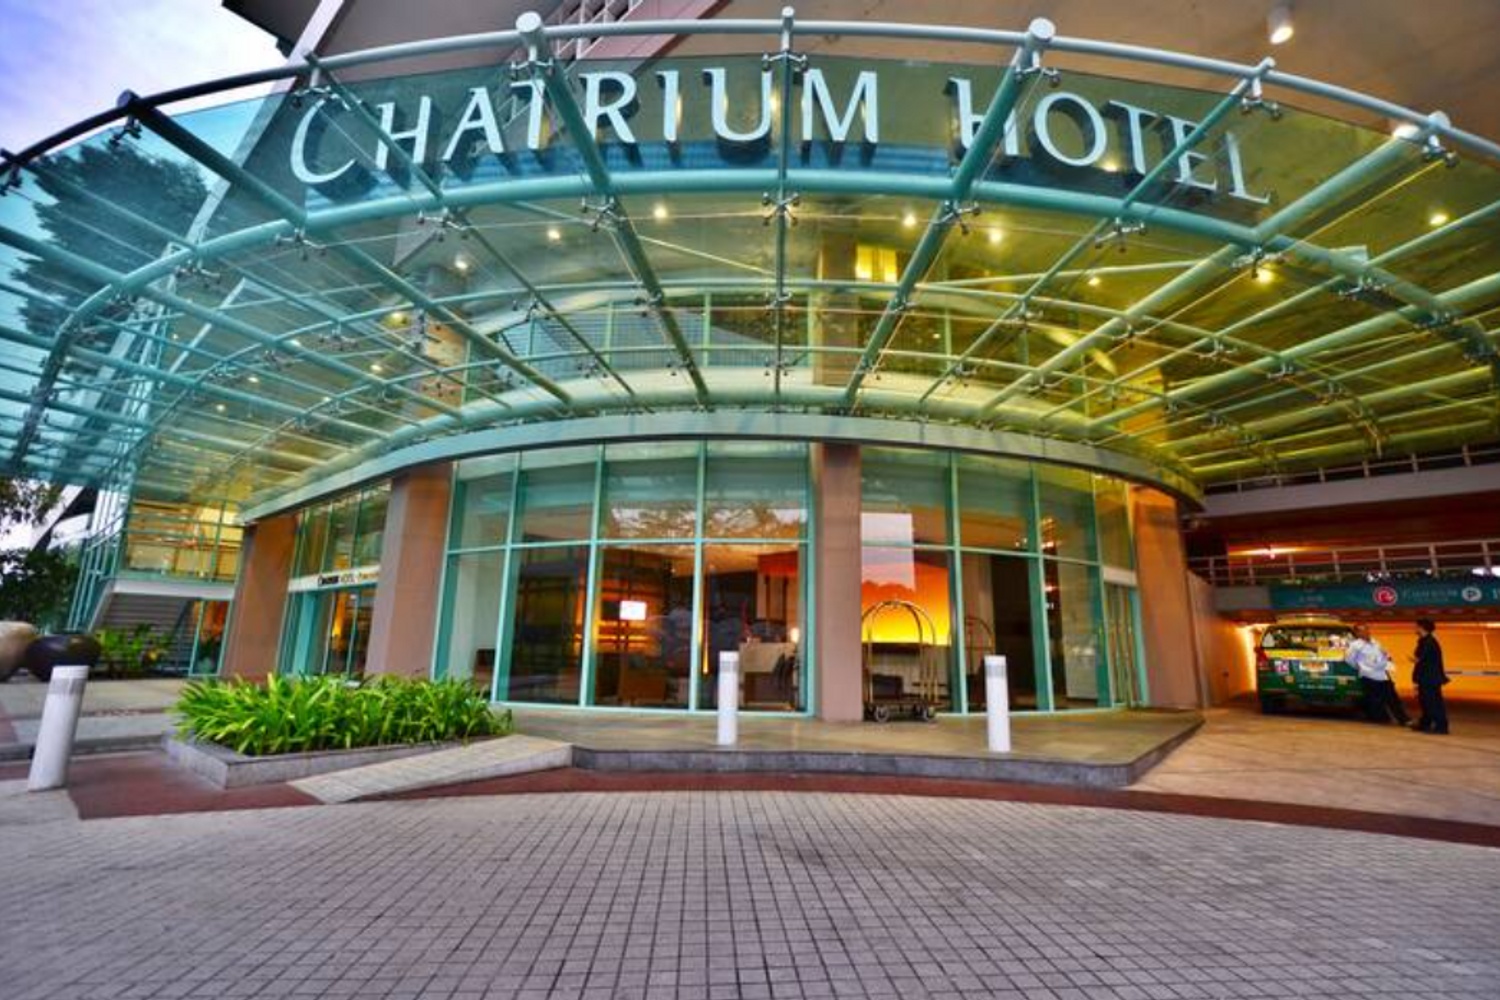 Chatrium Hotel Riverside Bangkok - Image 4